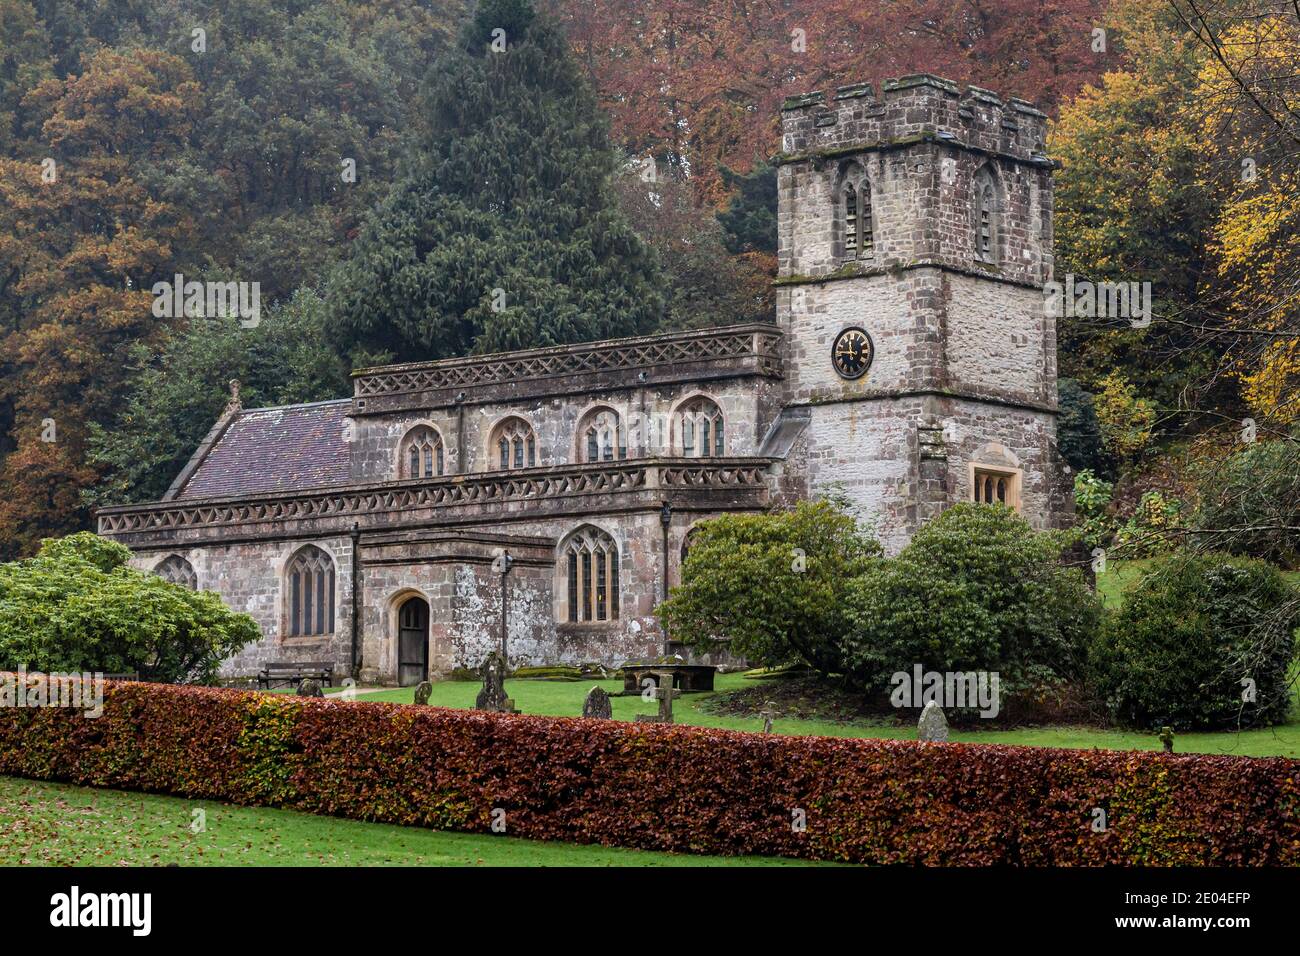 The fourteenth century St Peter's Church in Stourton, a small village near Stourhead, Wiltshire, UK Stock Photo